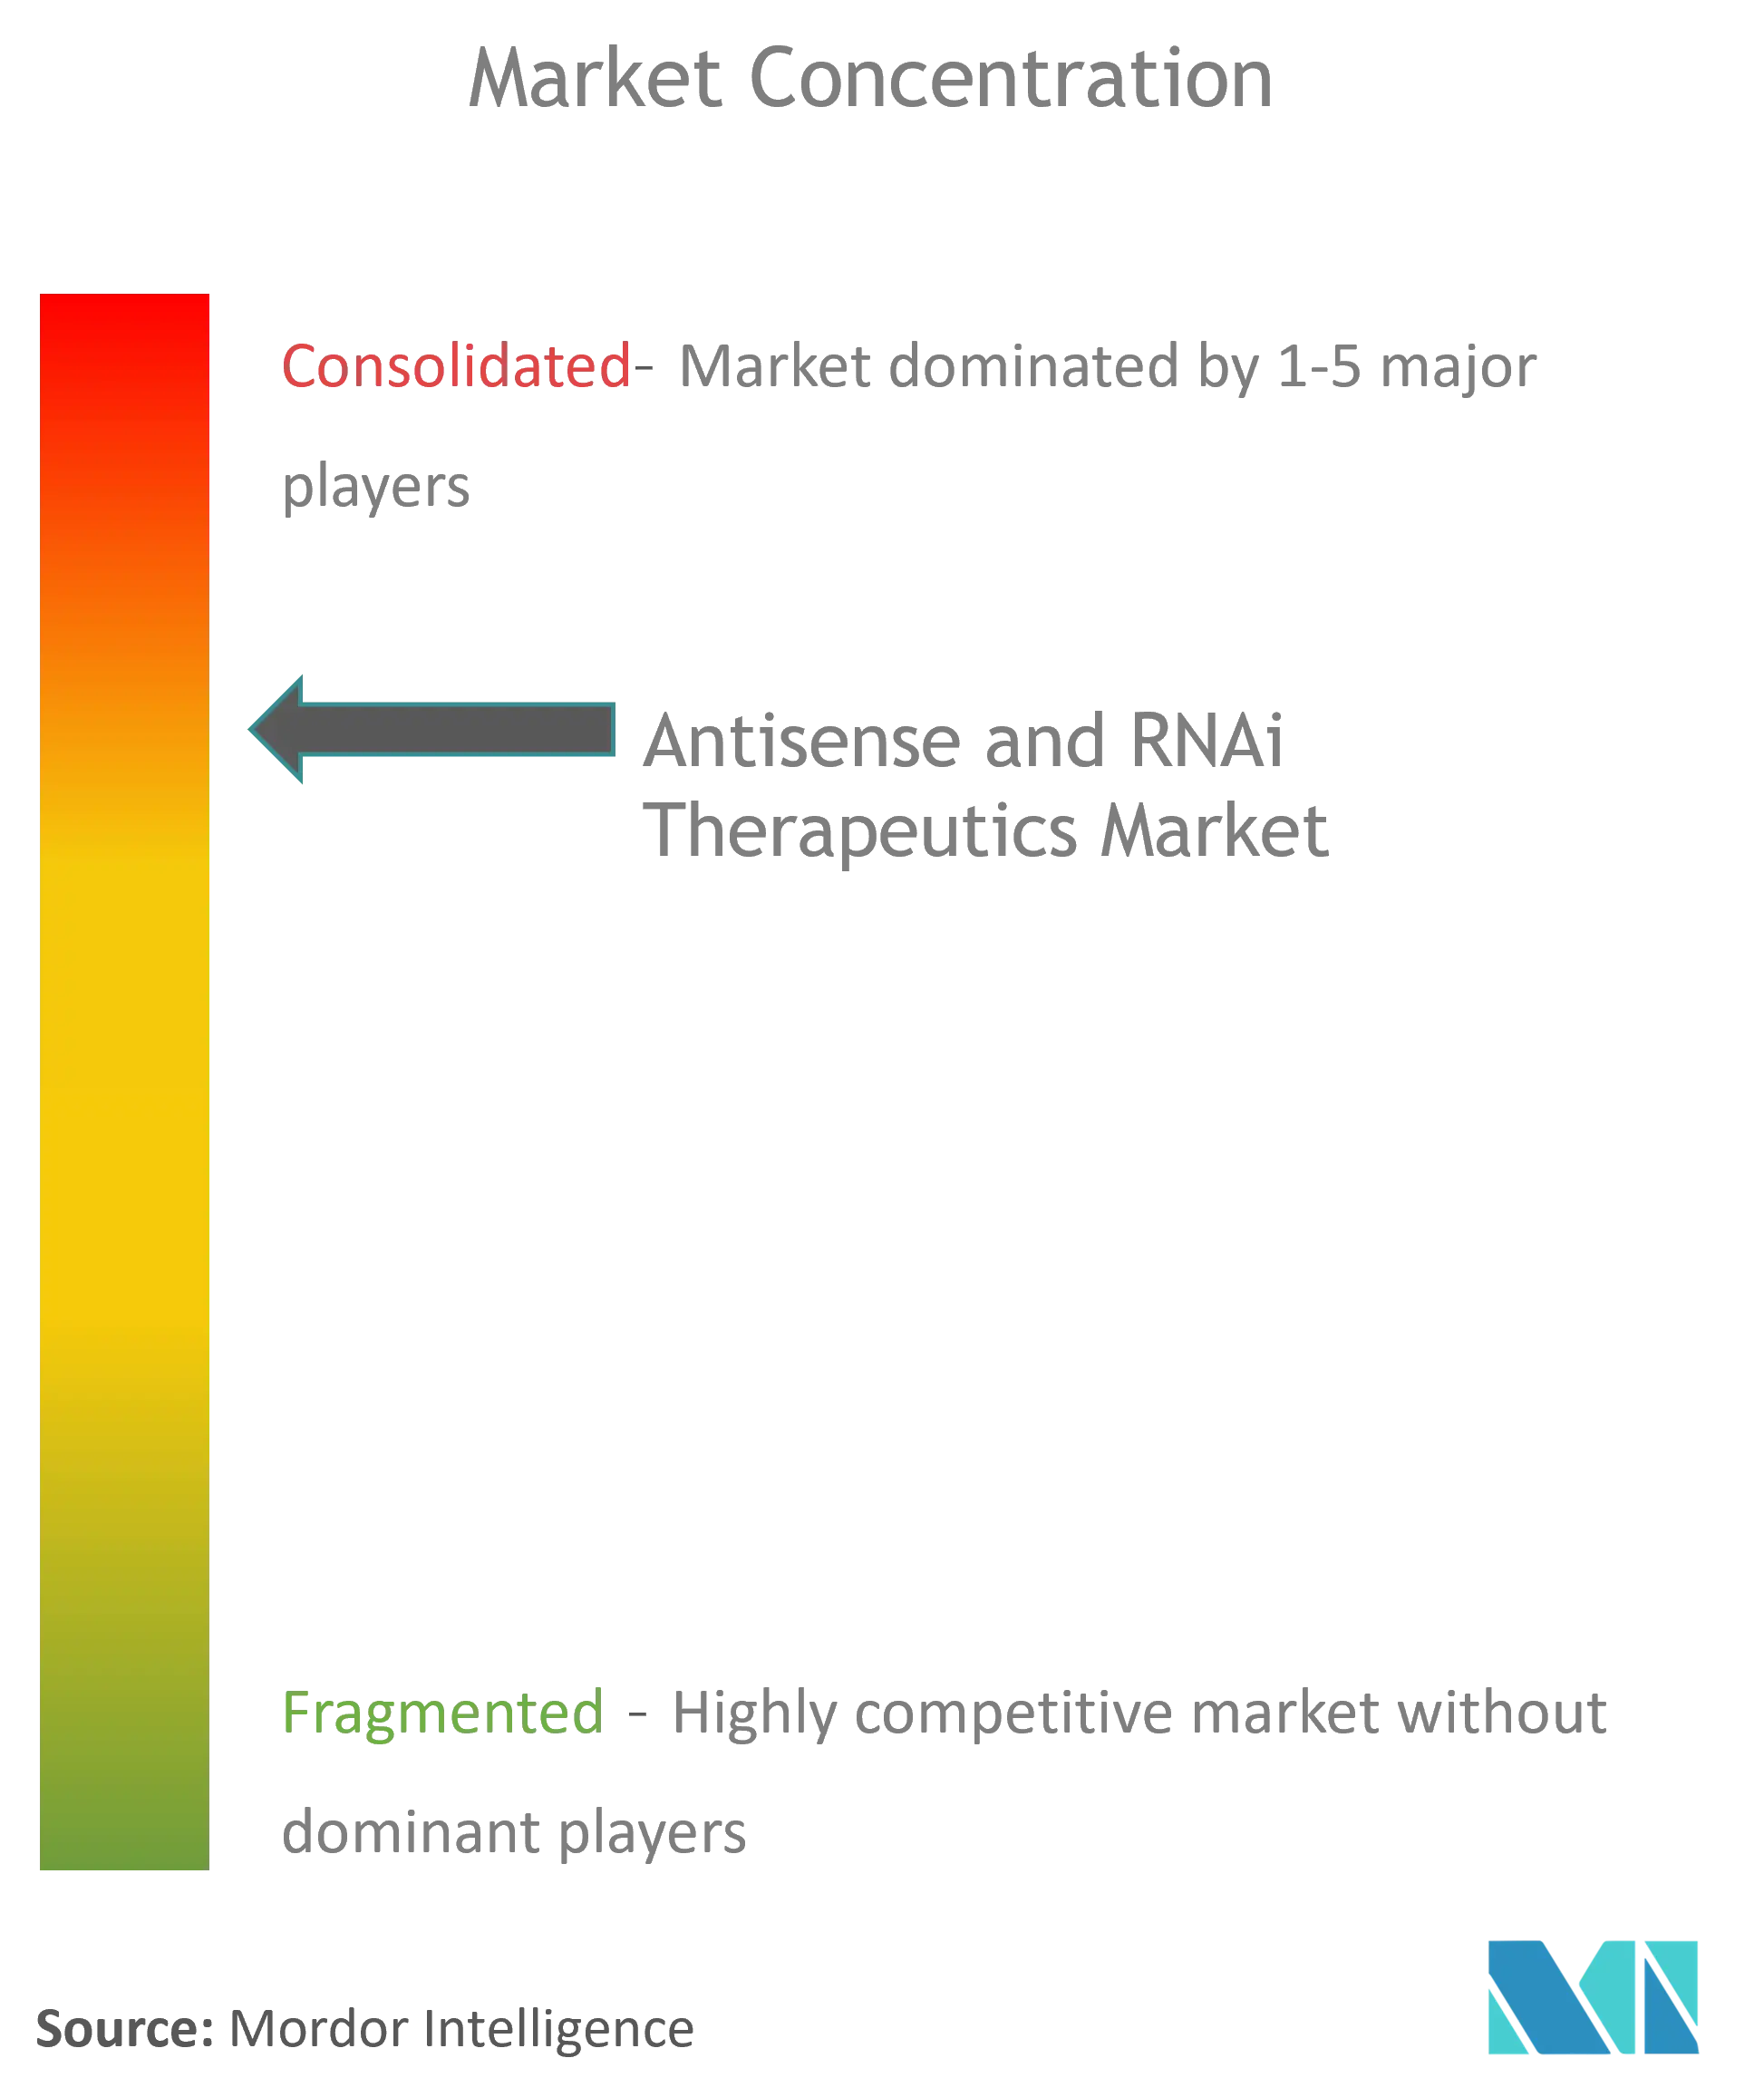 Antisense and RNAi Therapeutics Market Concentration